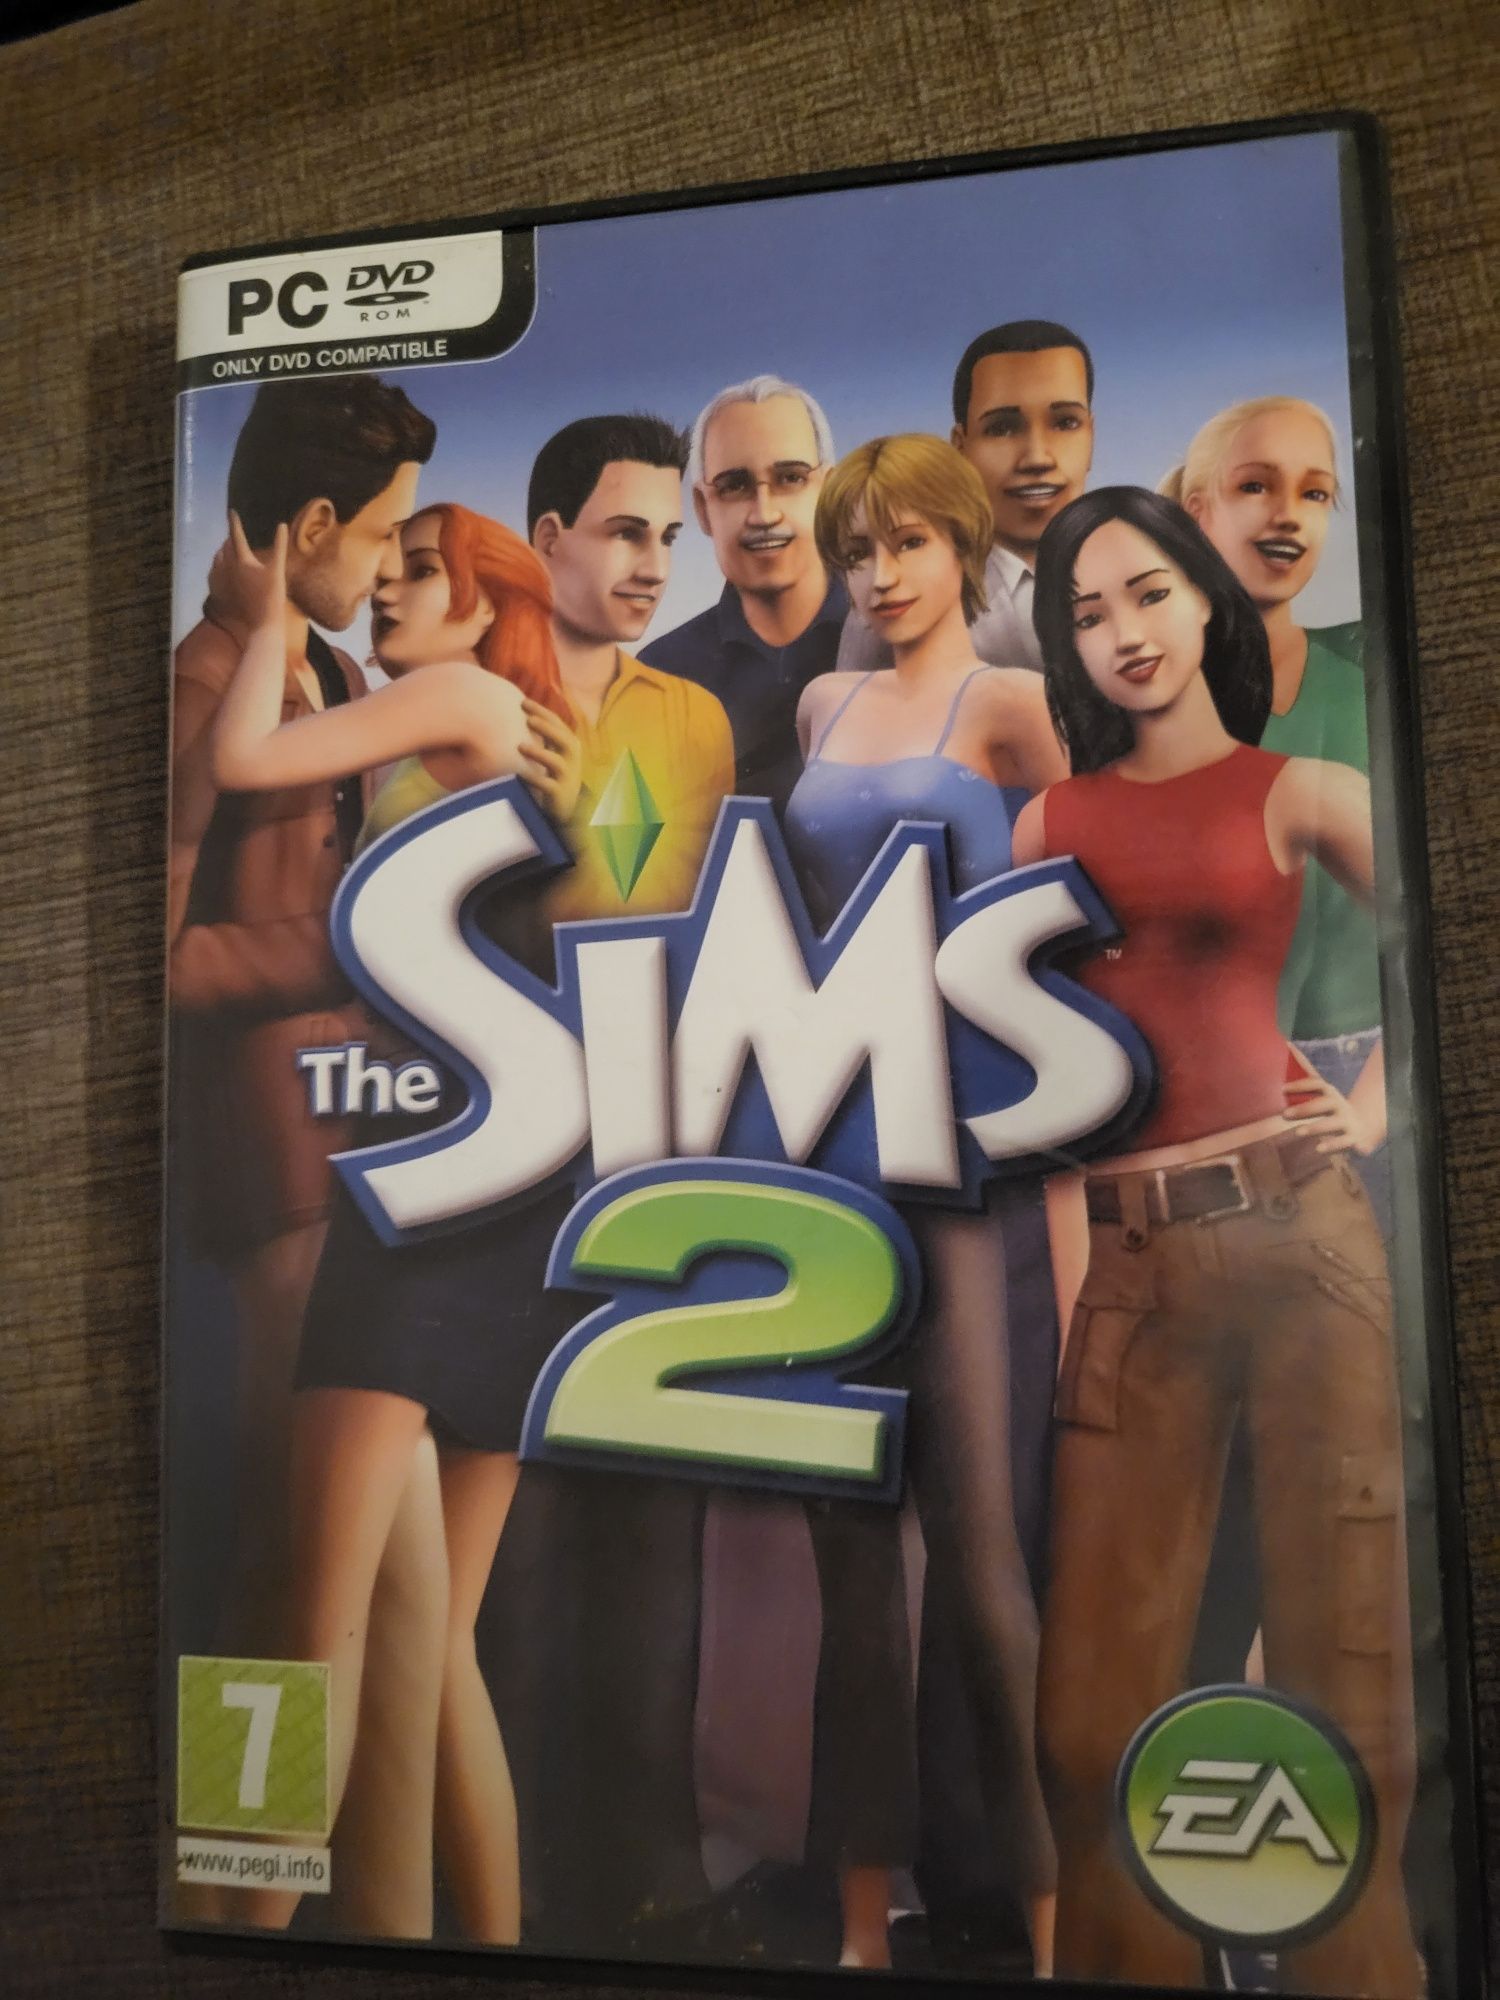 Sims 2 na Windows 7